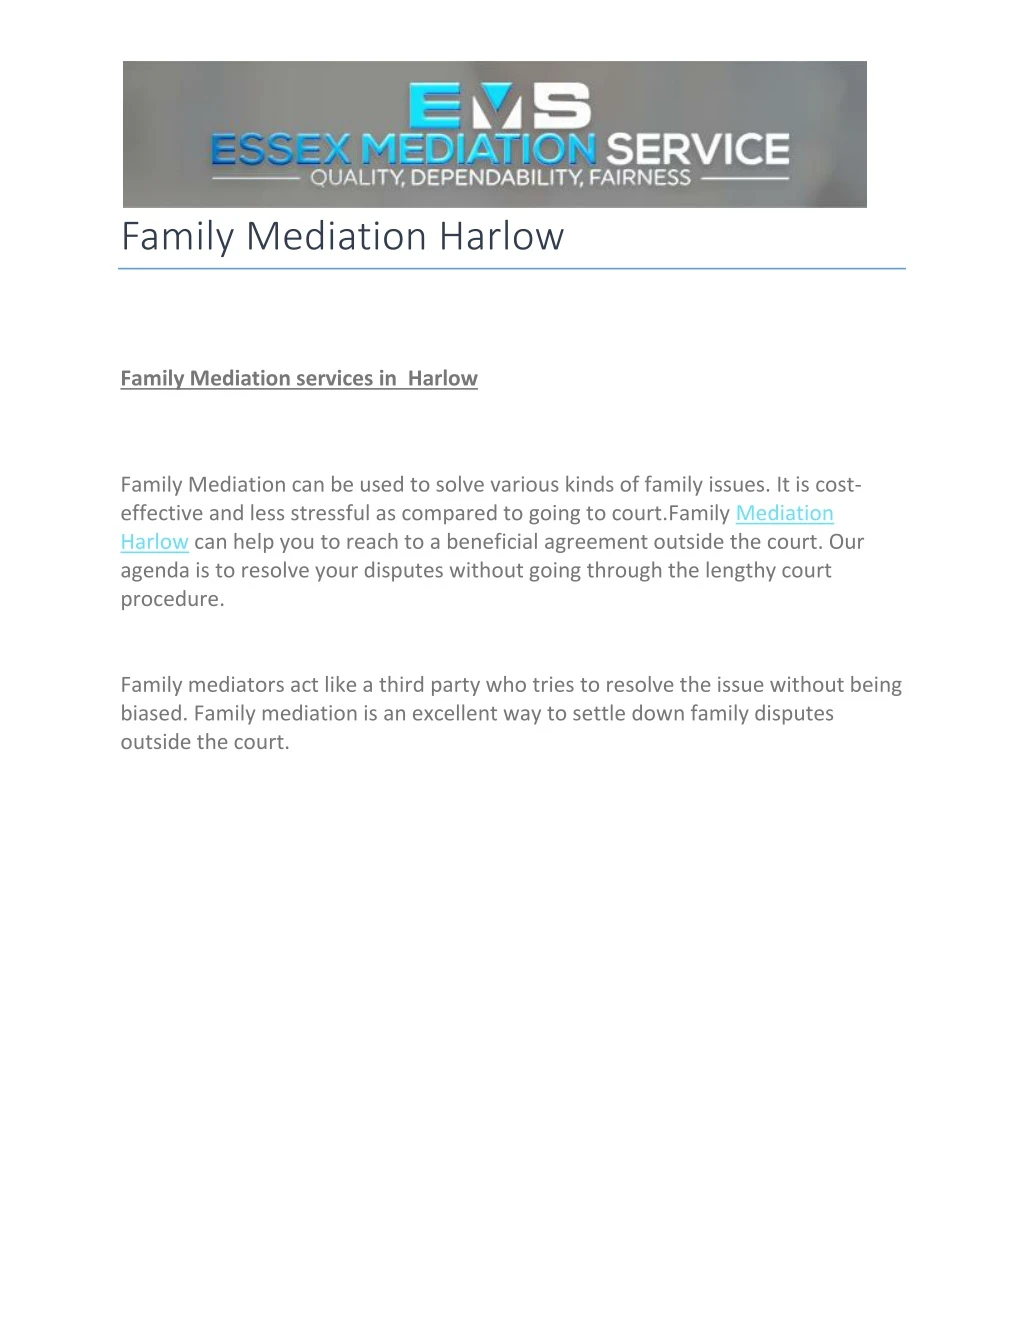 family mediation harlow